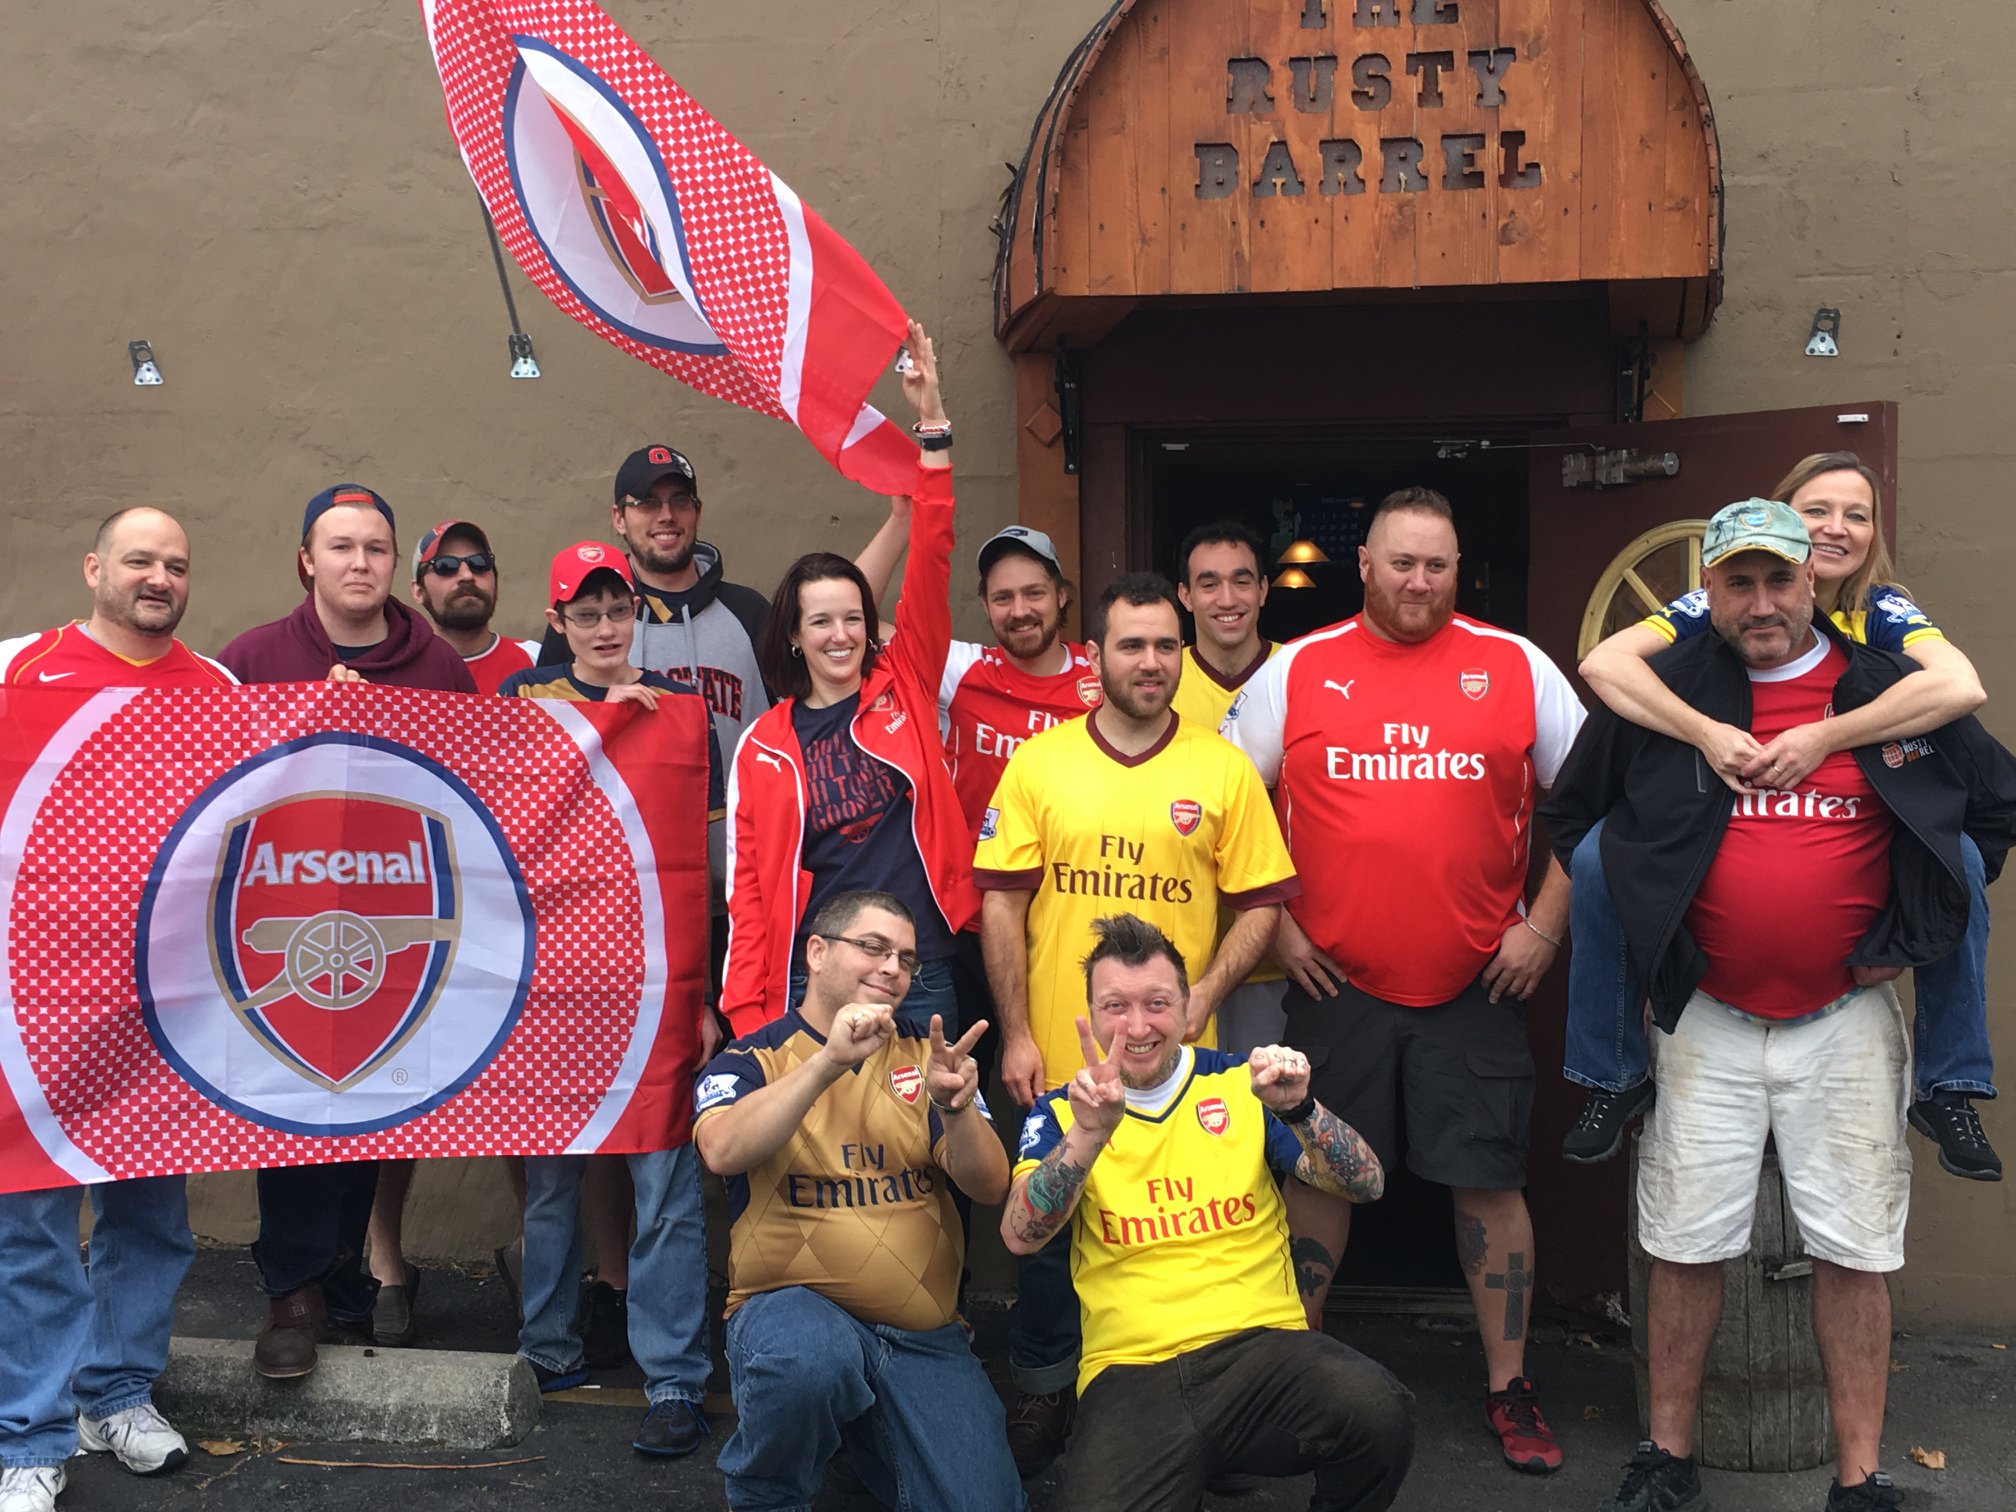 Arsenal Soccer at The Rusty Barrel